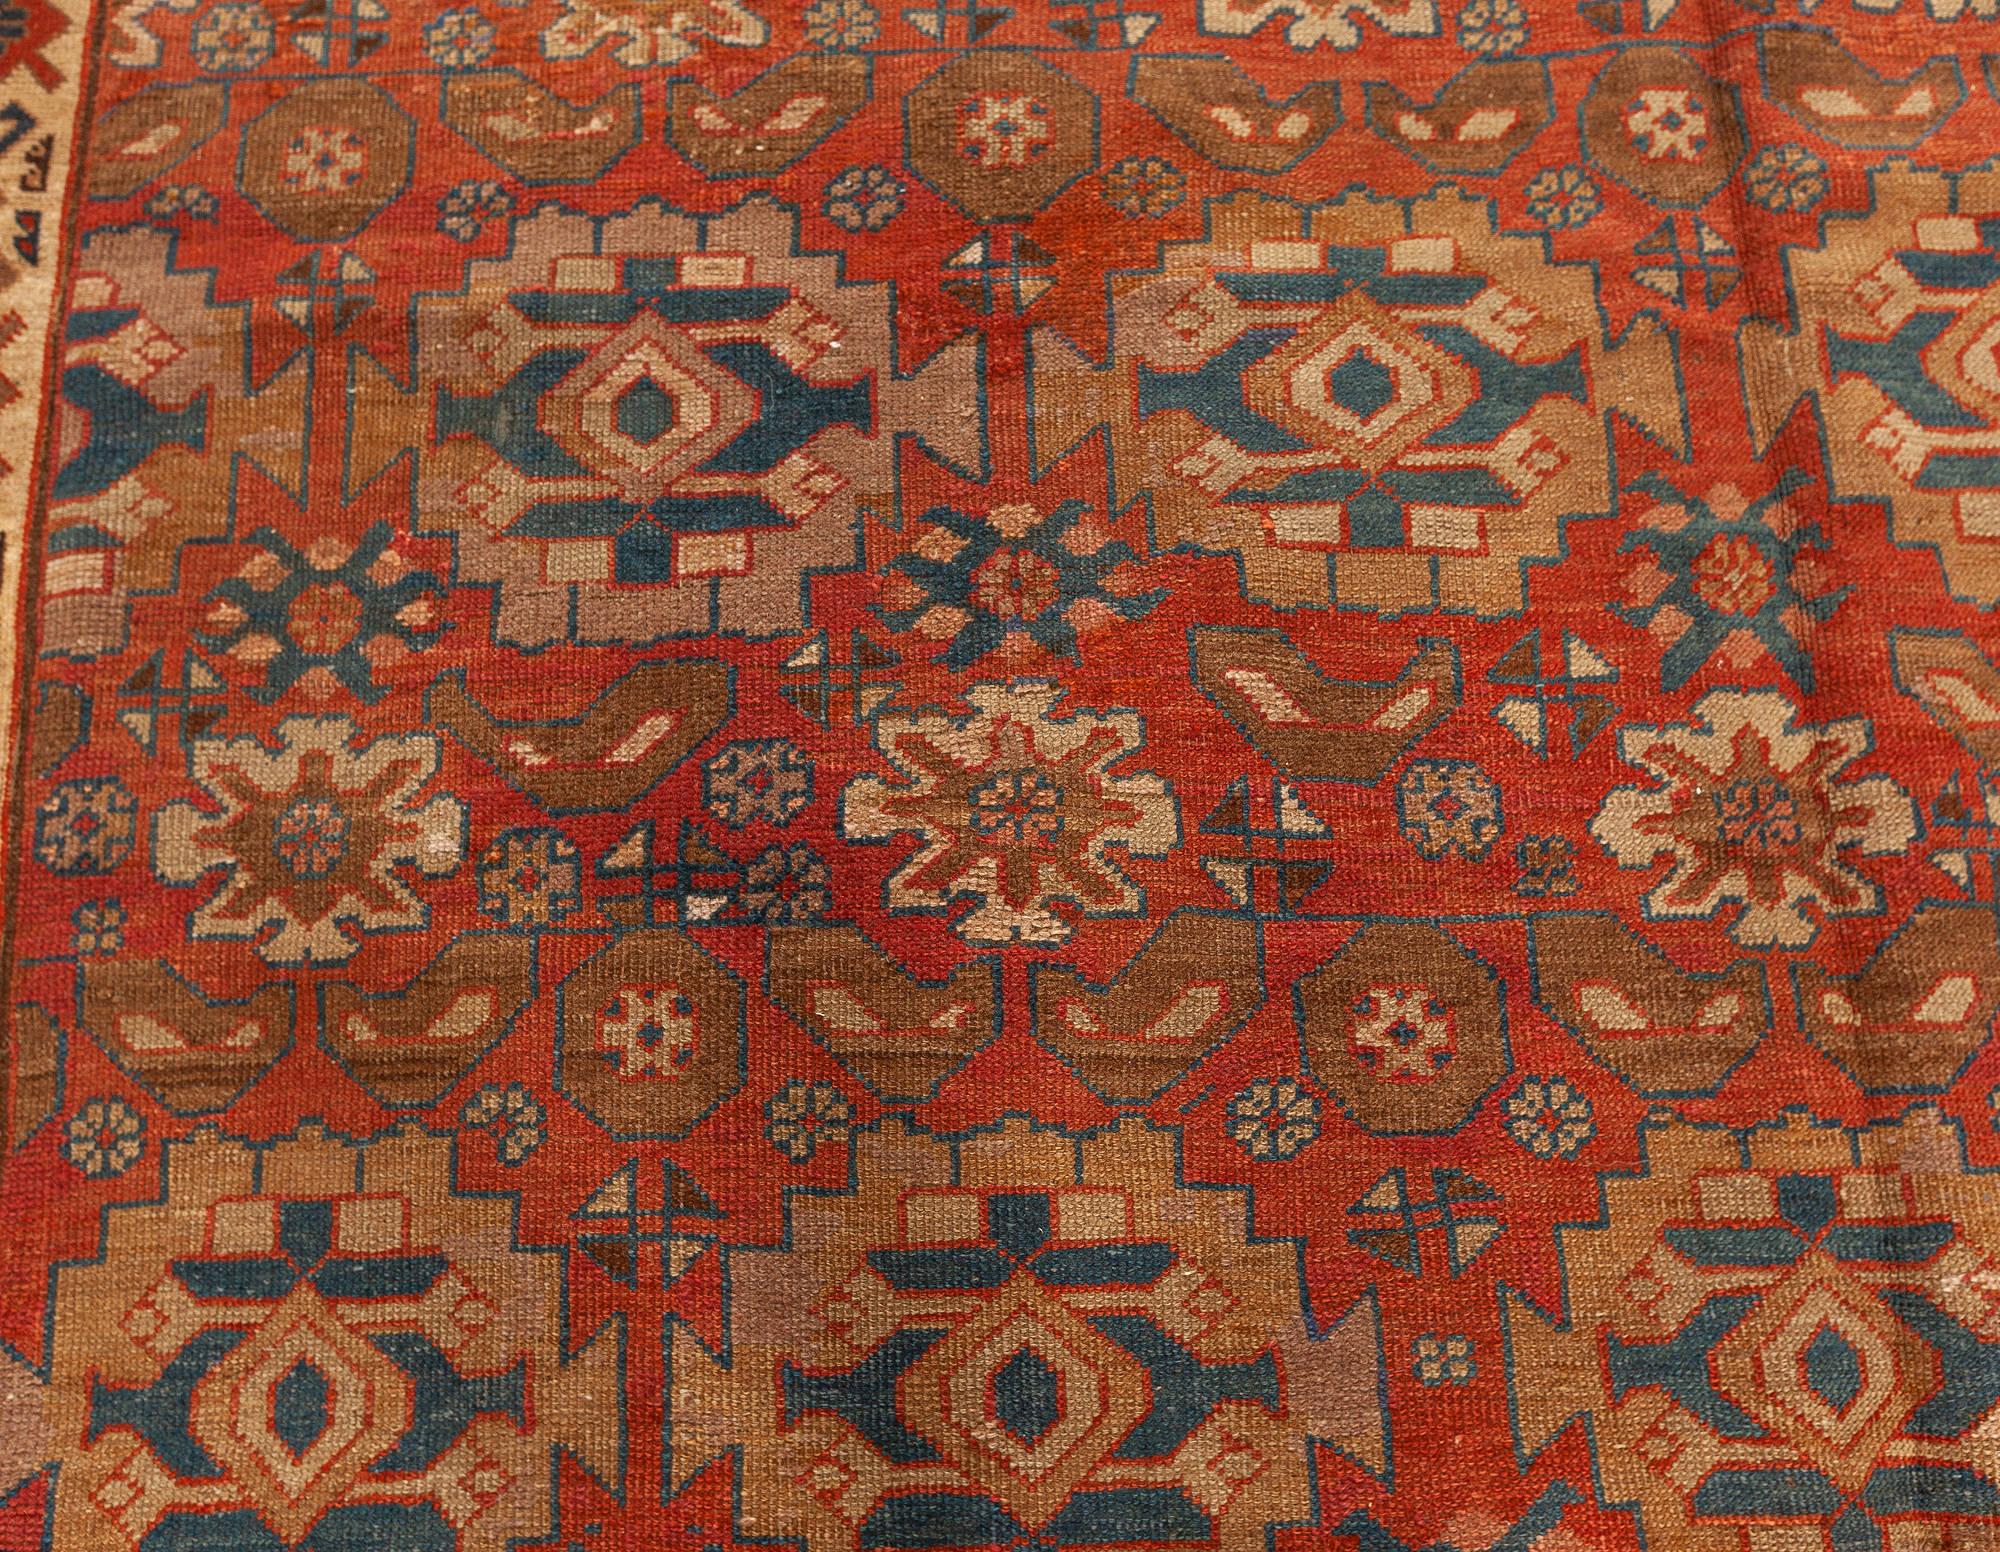 Authentic Persian Bakshaish Beige, Blue, Brown, Red Handmade Wool Rug
Size: 8'1